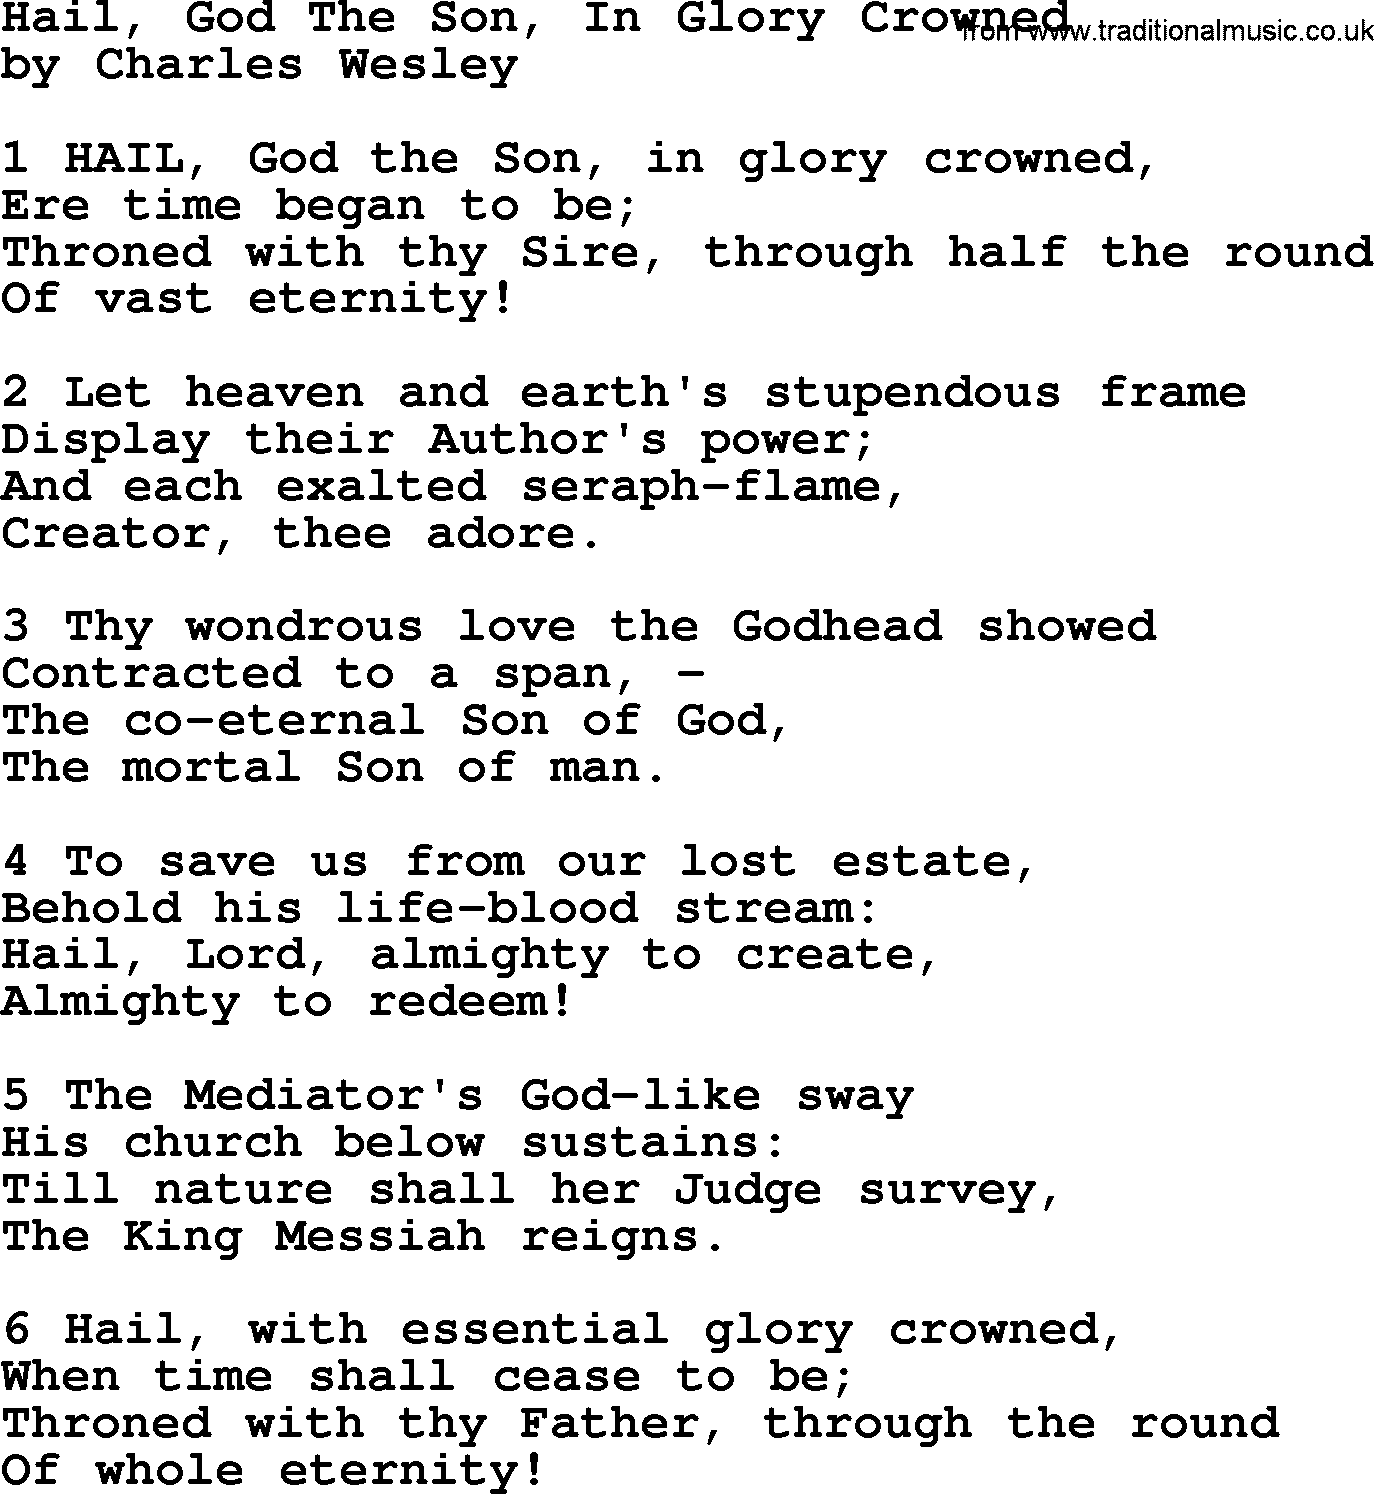 Charles Wesley hymn: Hail, God The Son, In Glory Crowned, lyrics